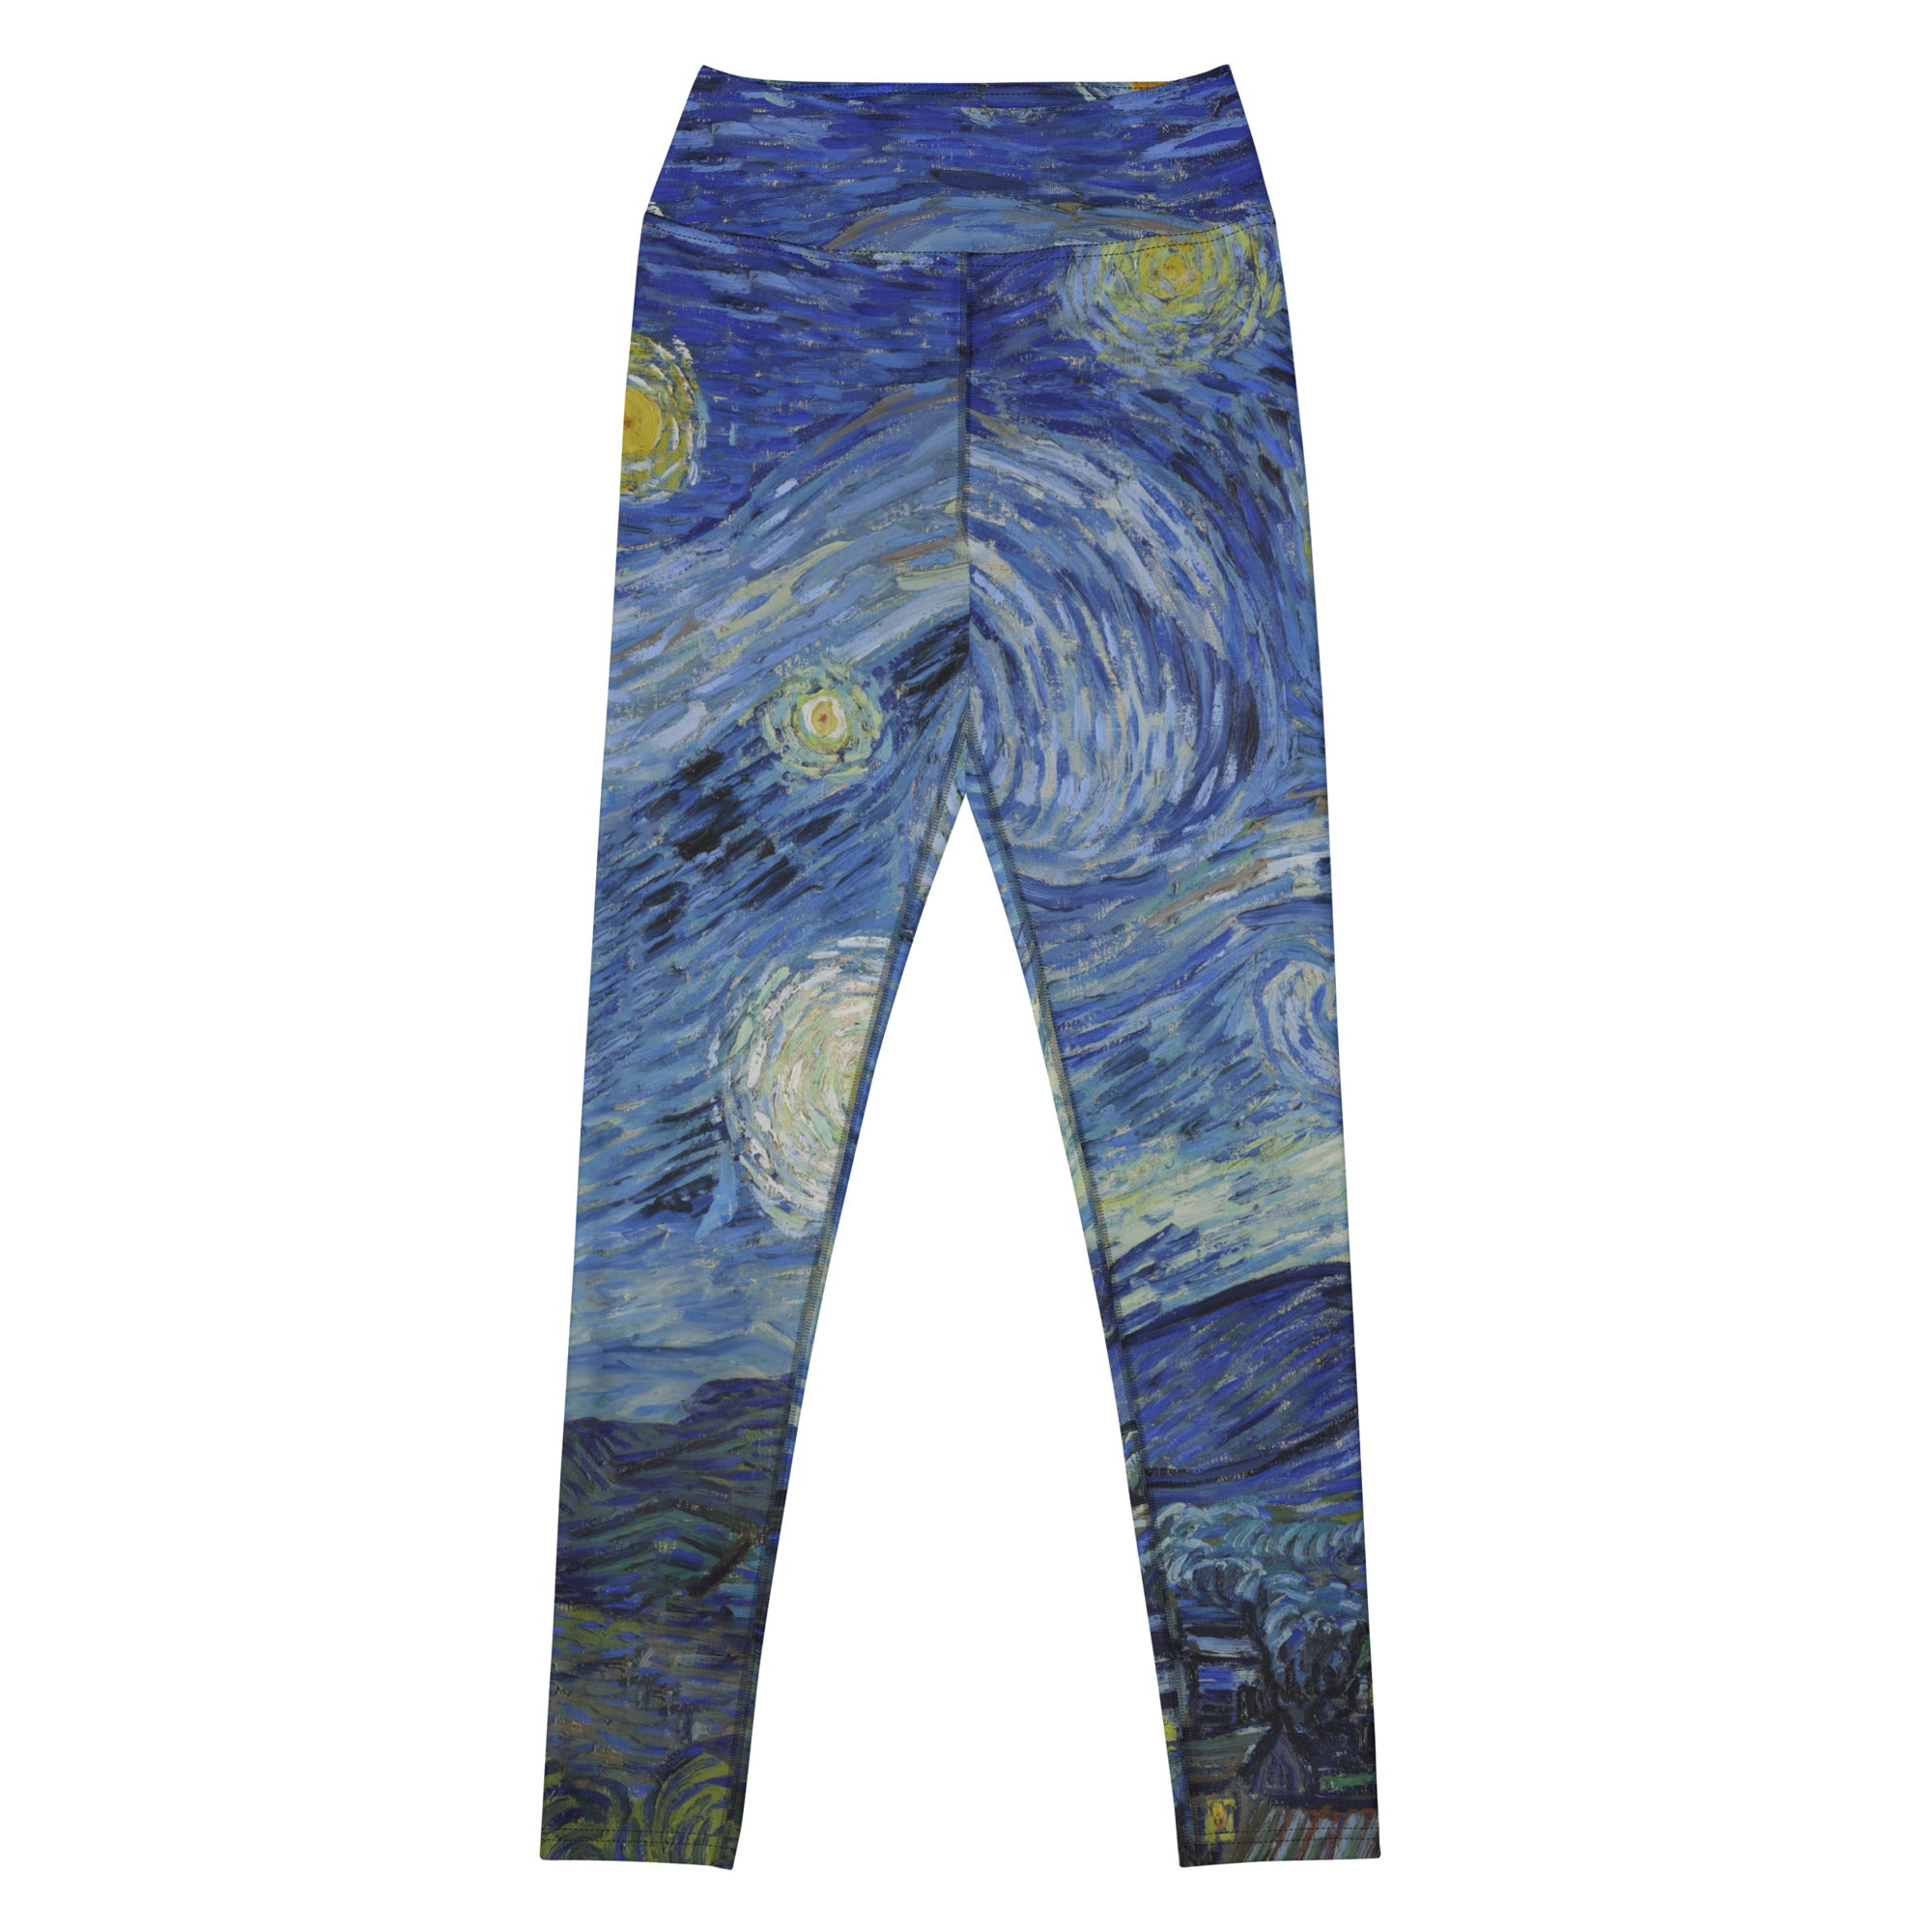 Yoga-Leggings „Sternennacht“ von Vincent van Gogh, berühmtes Gemälde | Premium-Kunst-Yoga-Leggings